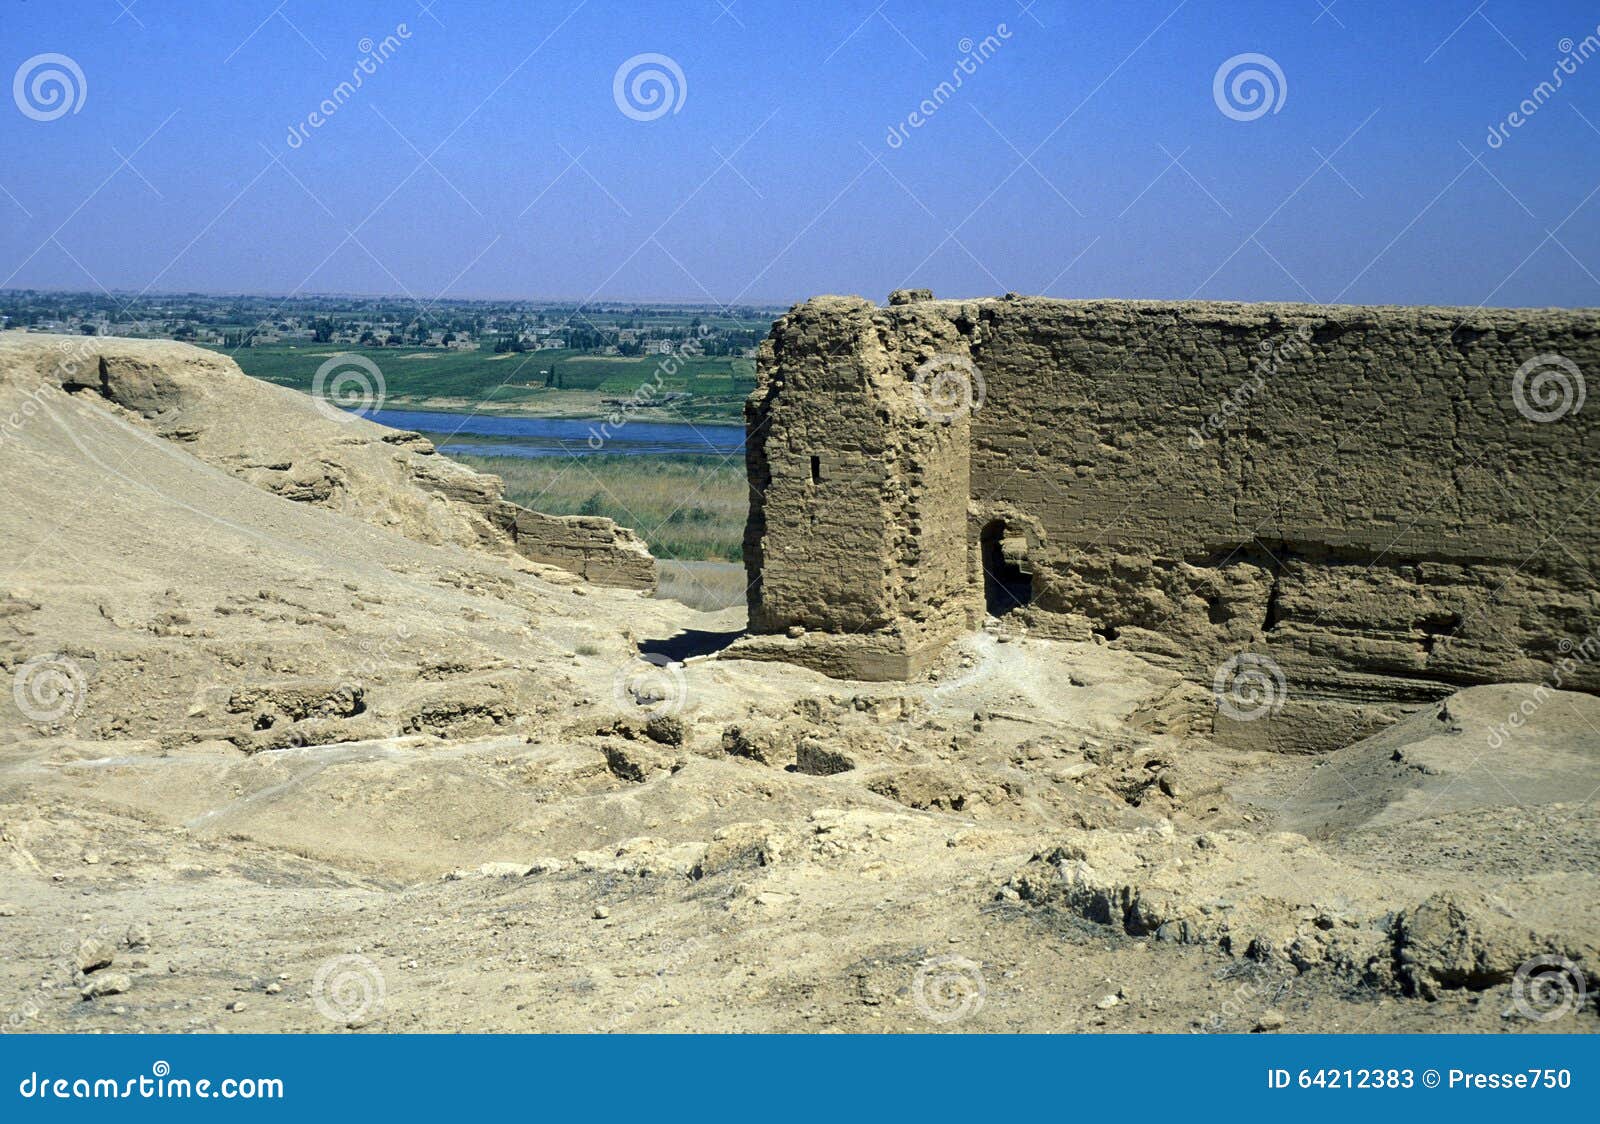 middle east syria abu kamal dura europos ruins